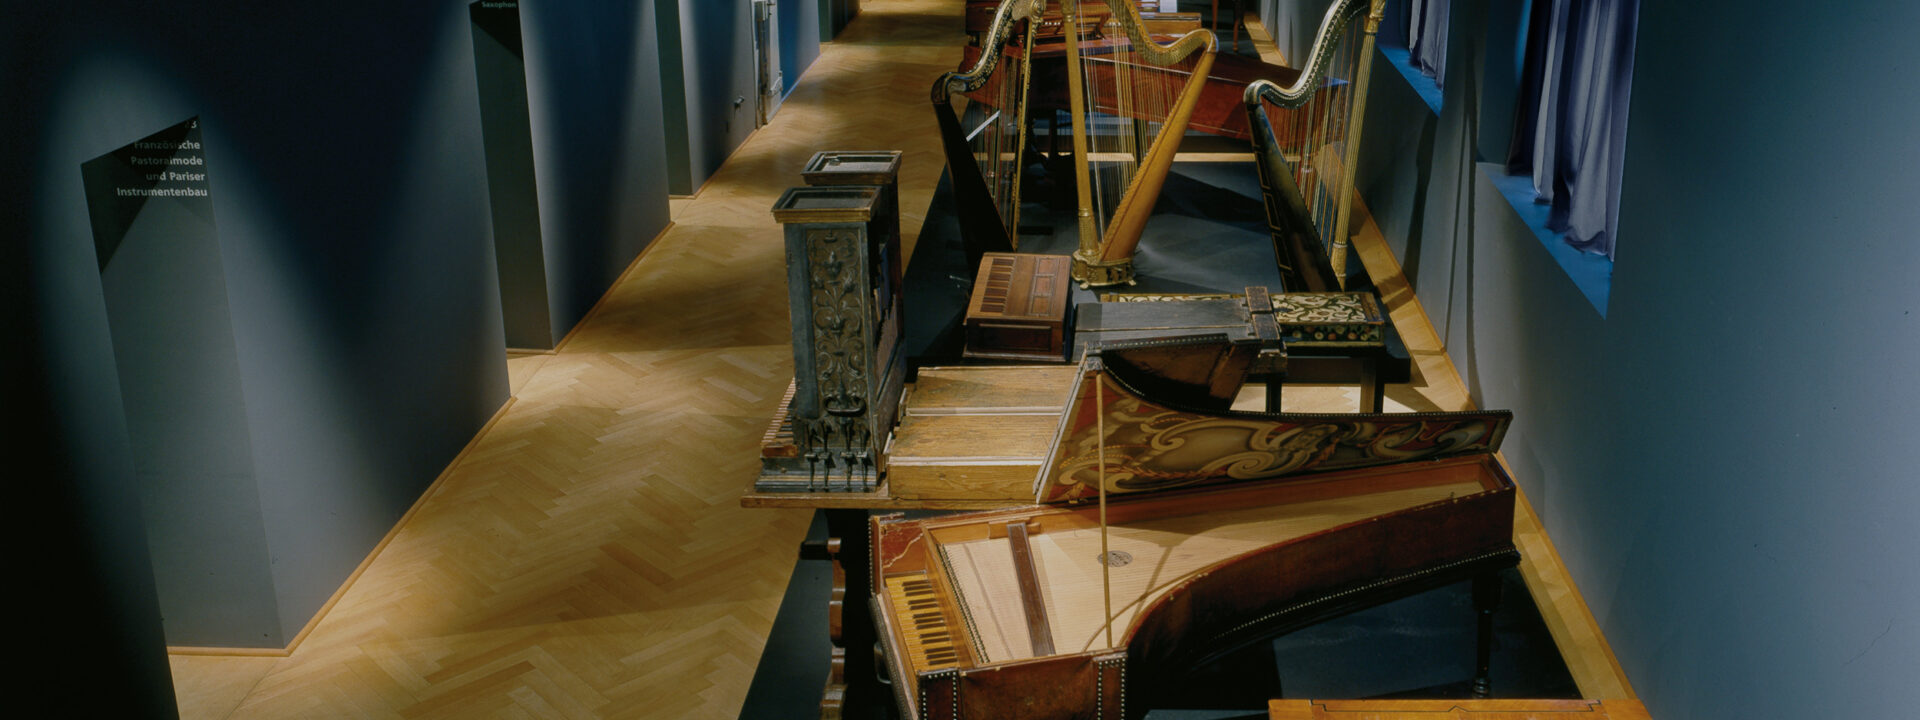 Historisches Museum Basel - Musikmuseum